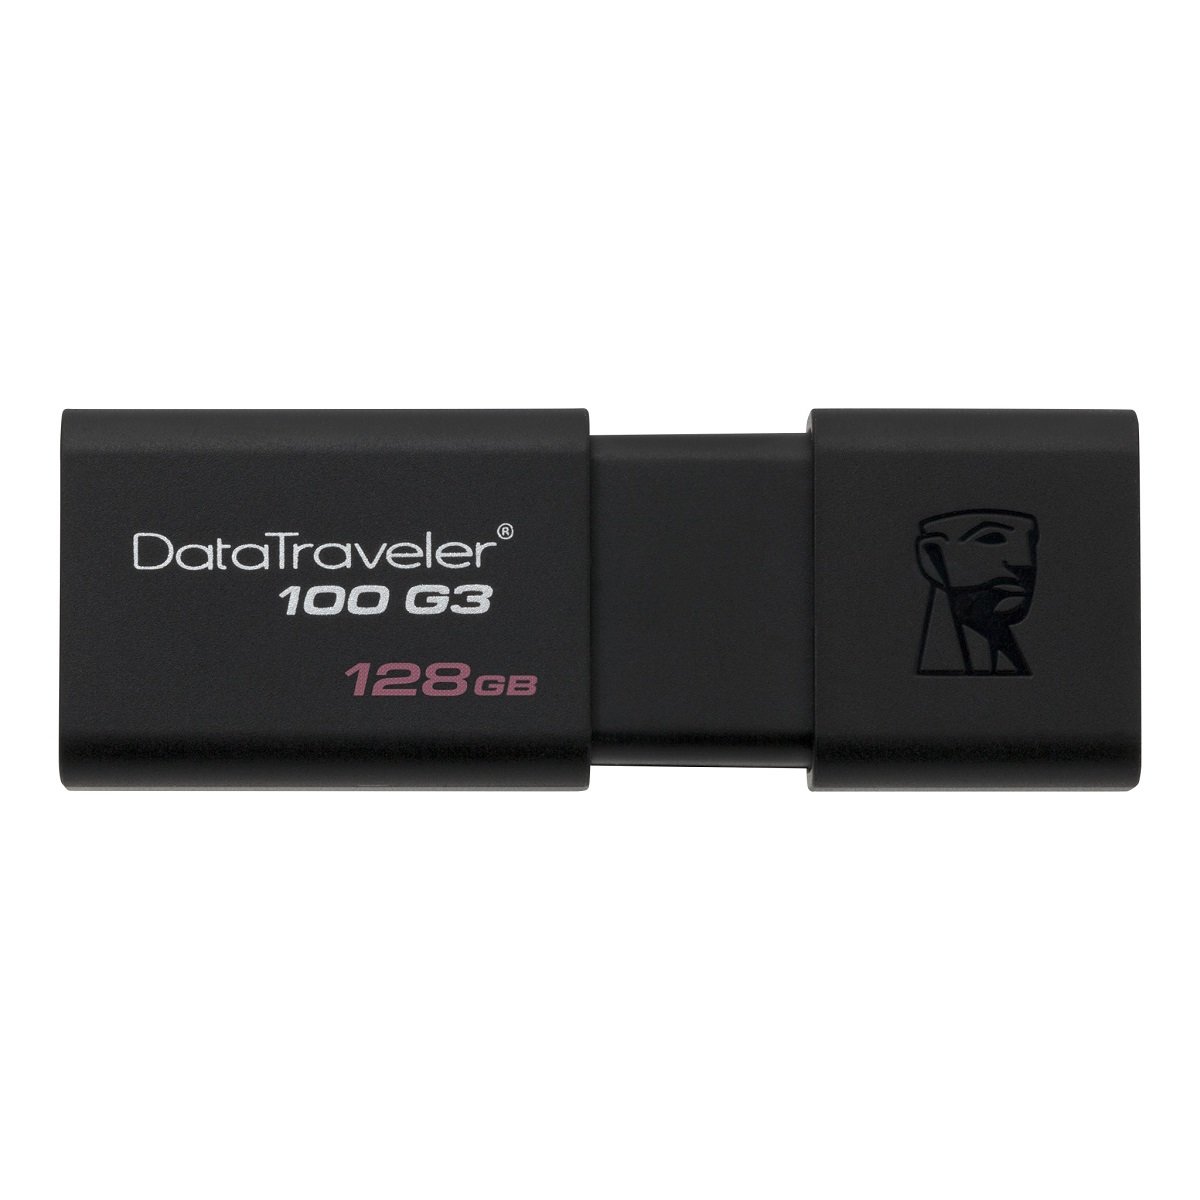 Pendrive Kingston Data Traveler 100 G3 128GB USB 3.0 DT100G3/128GB widok w poziomie